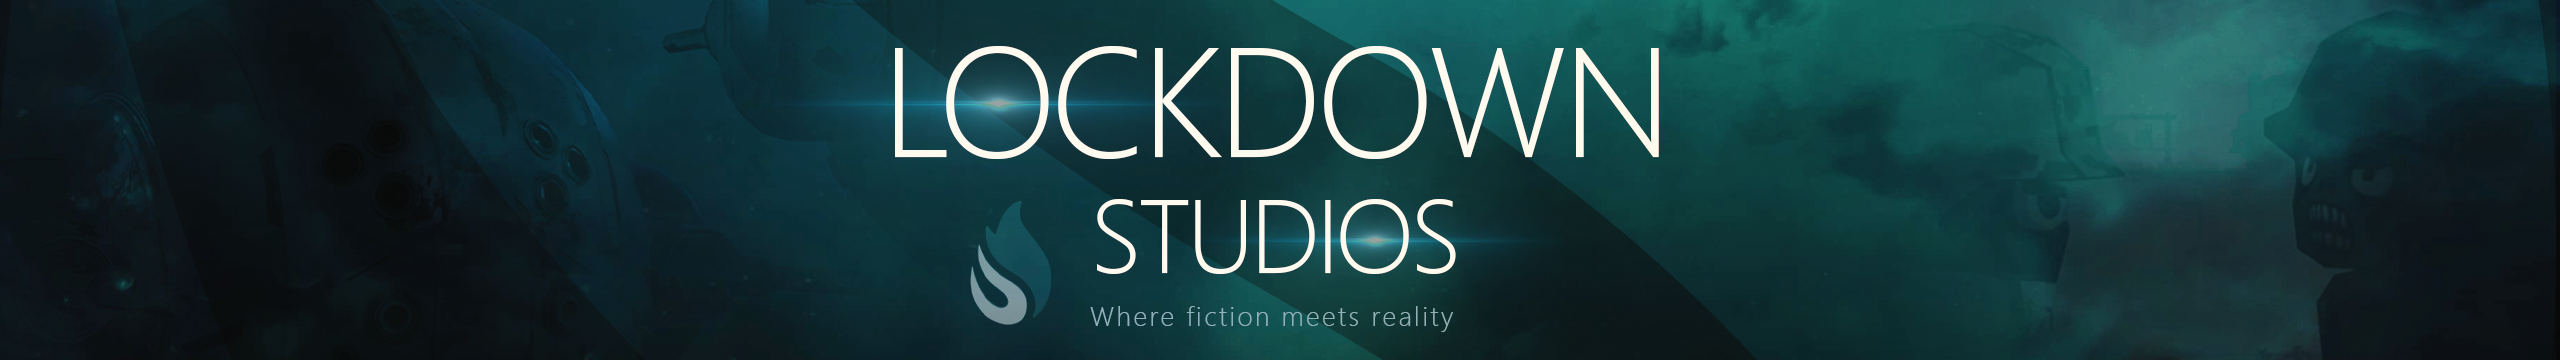 Lockdown studios